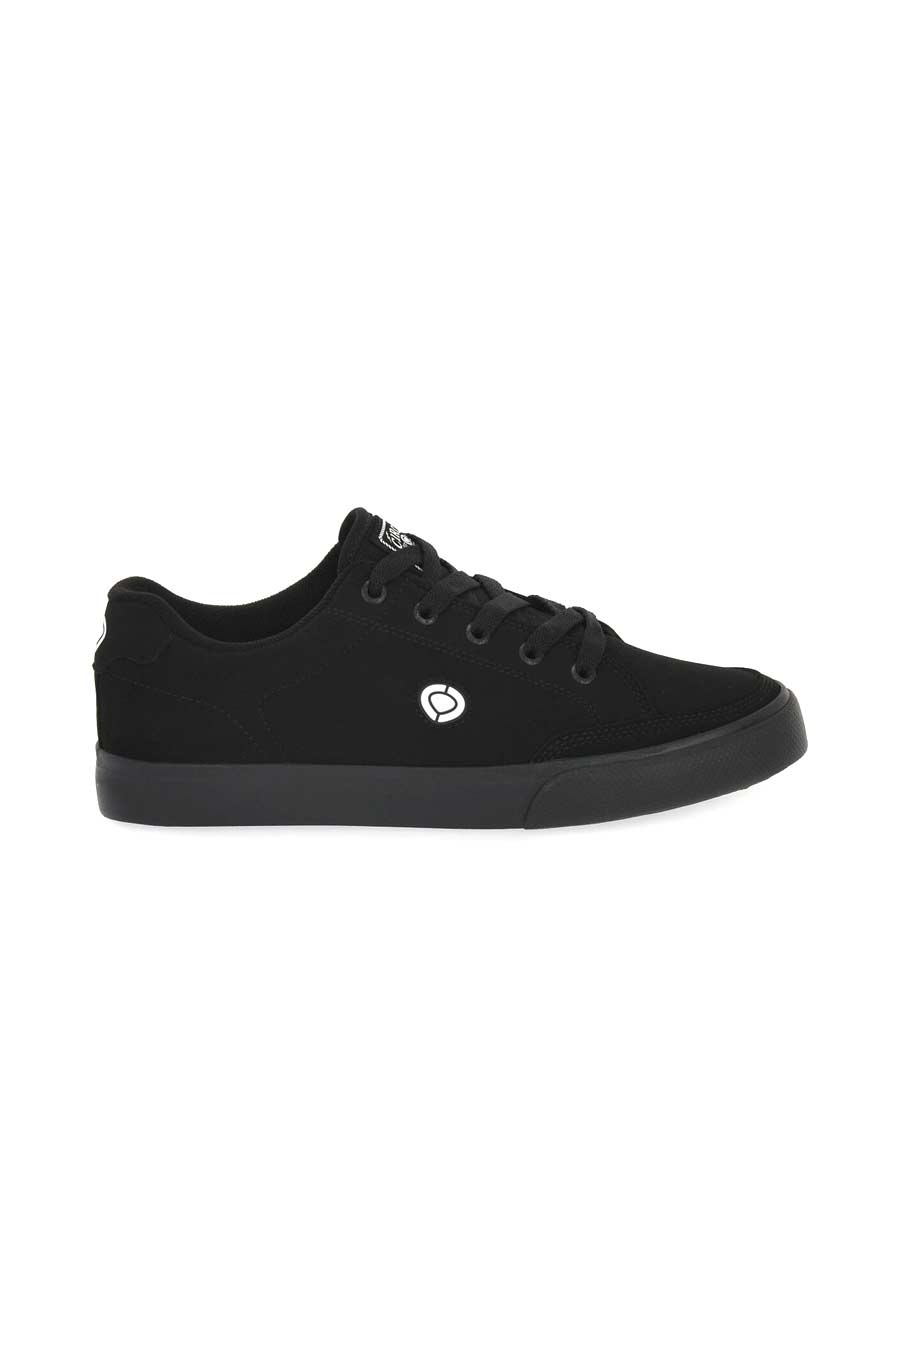 CIRCA Sneakers AL50 SLIM BLACK/BLACK - BLACK-C1RCA000033133-323-BLACK 28484